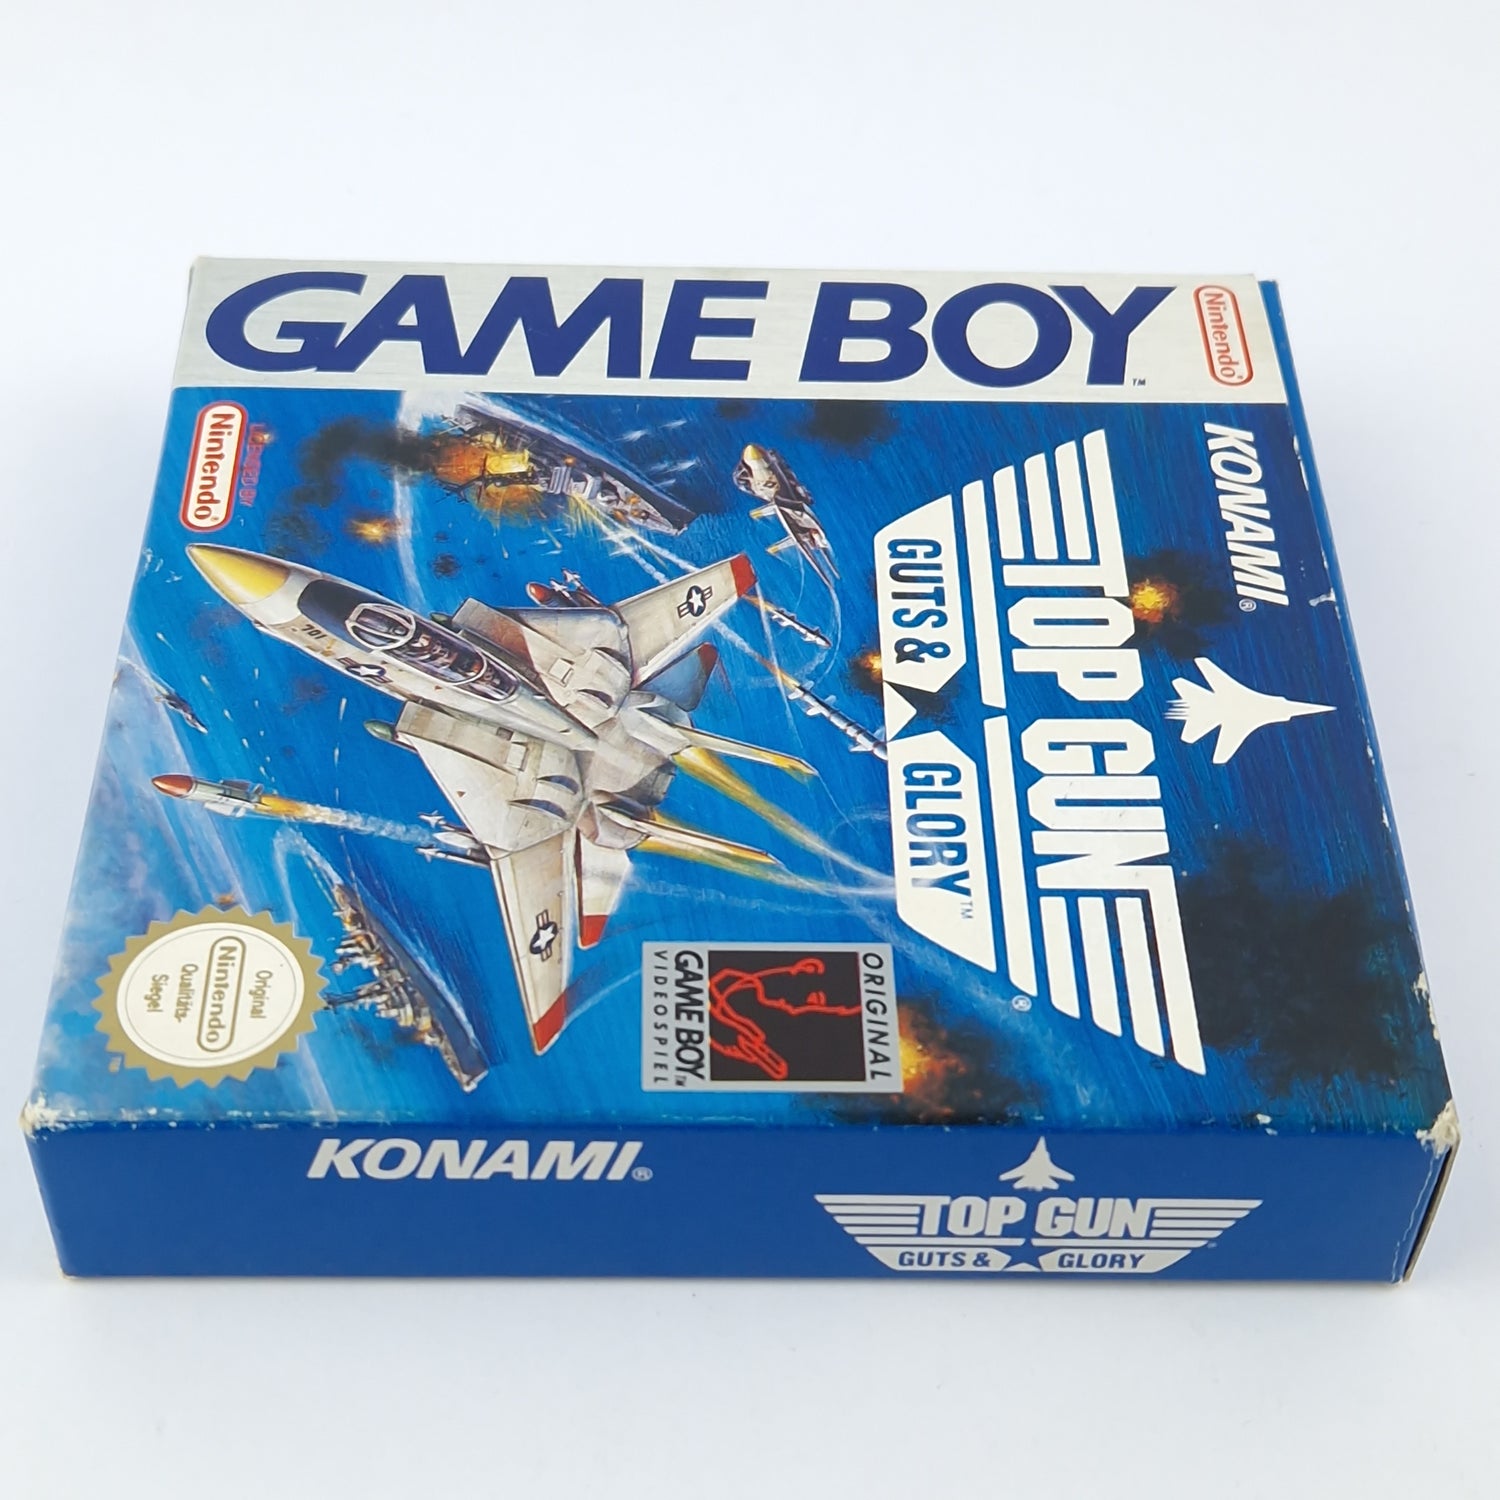 Nintendo Game Boy Game: Top Gun Guts & Glory - Module Instructions OVP cib GAMEBOY